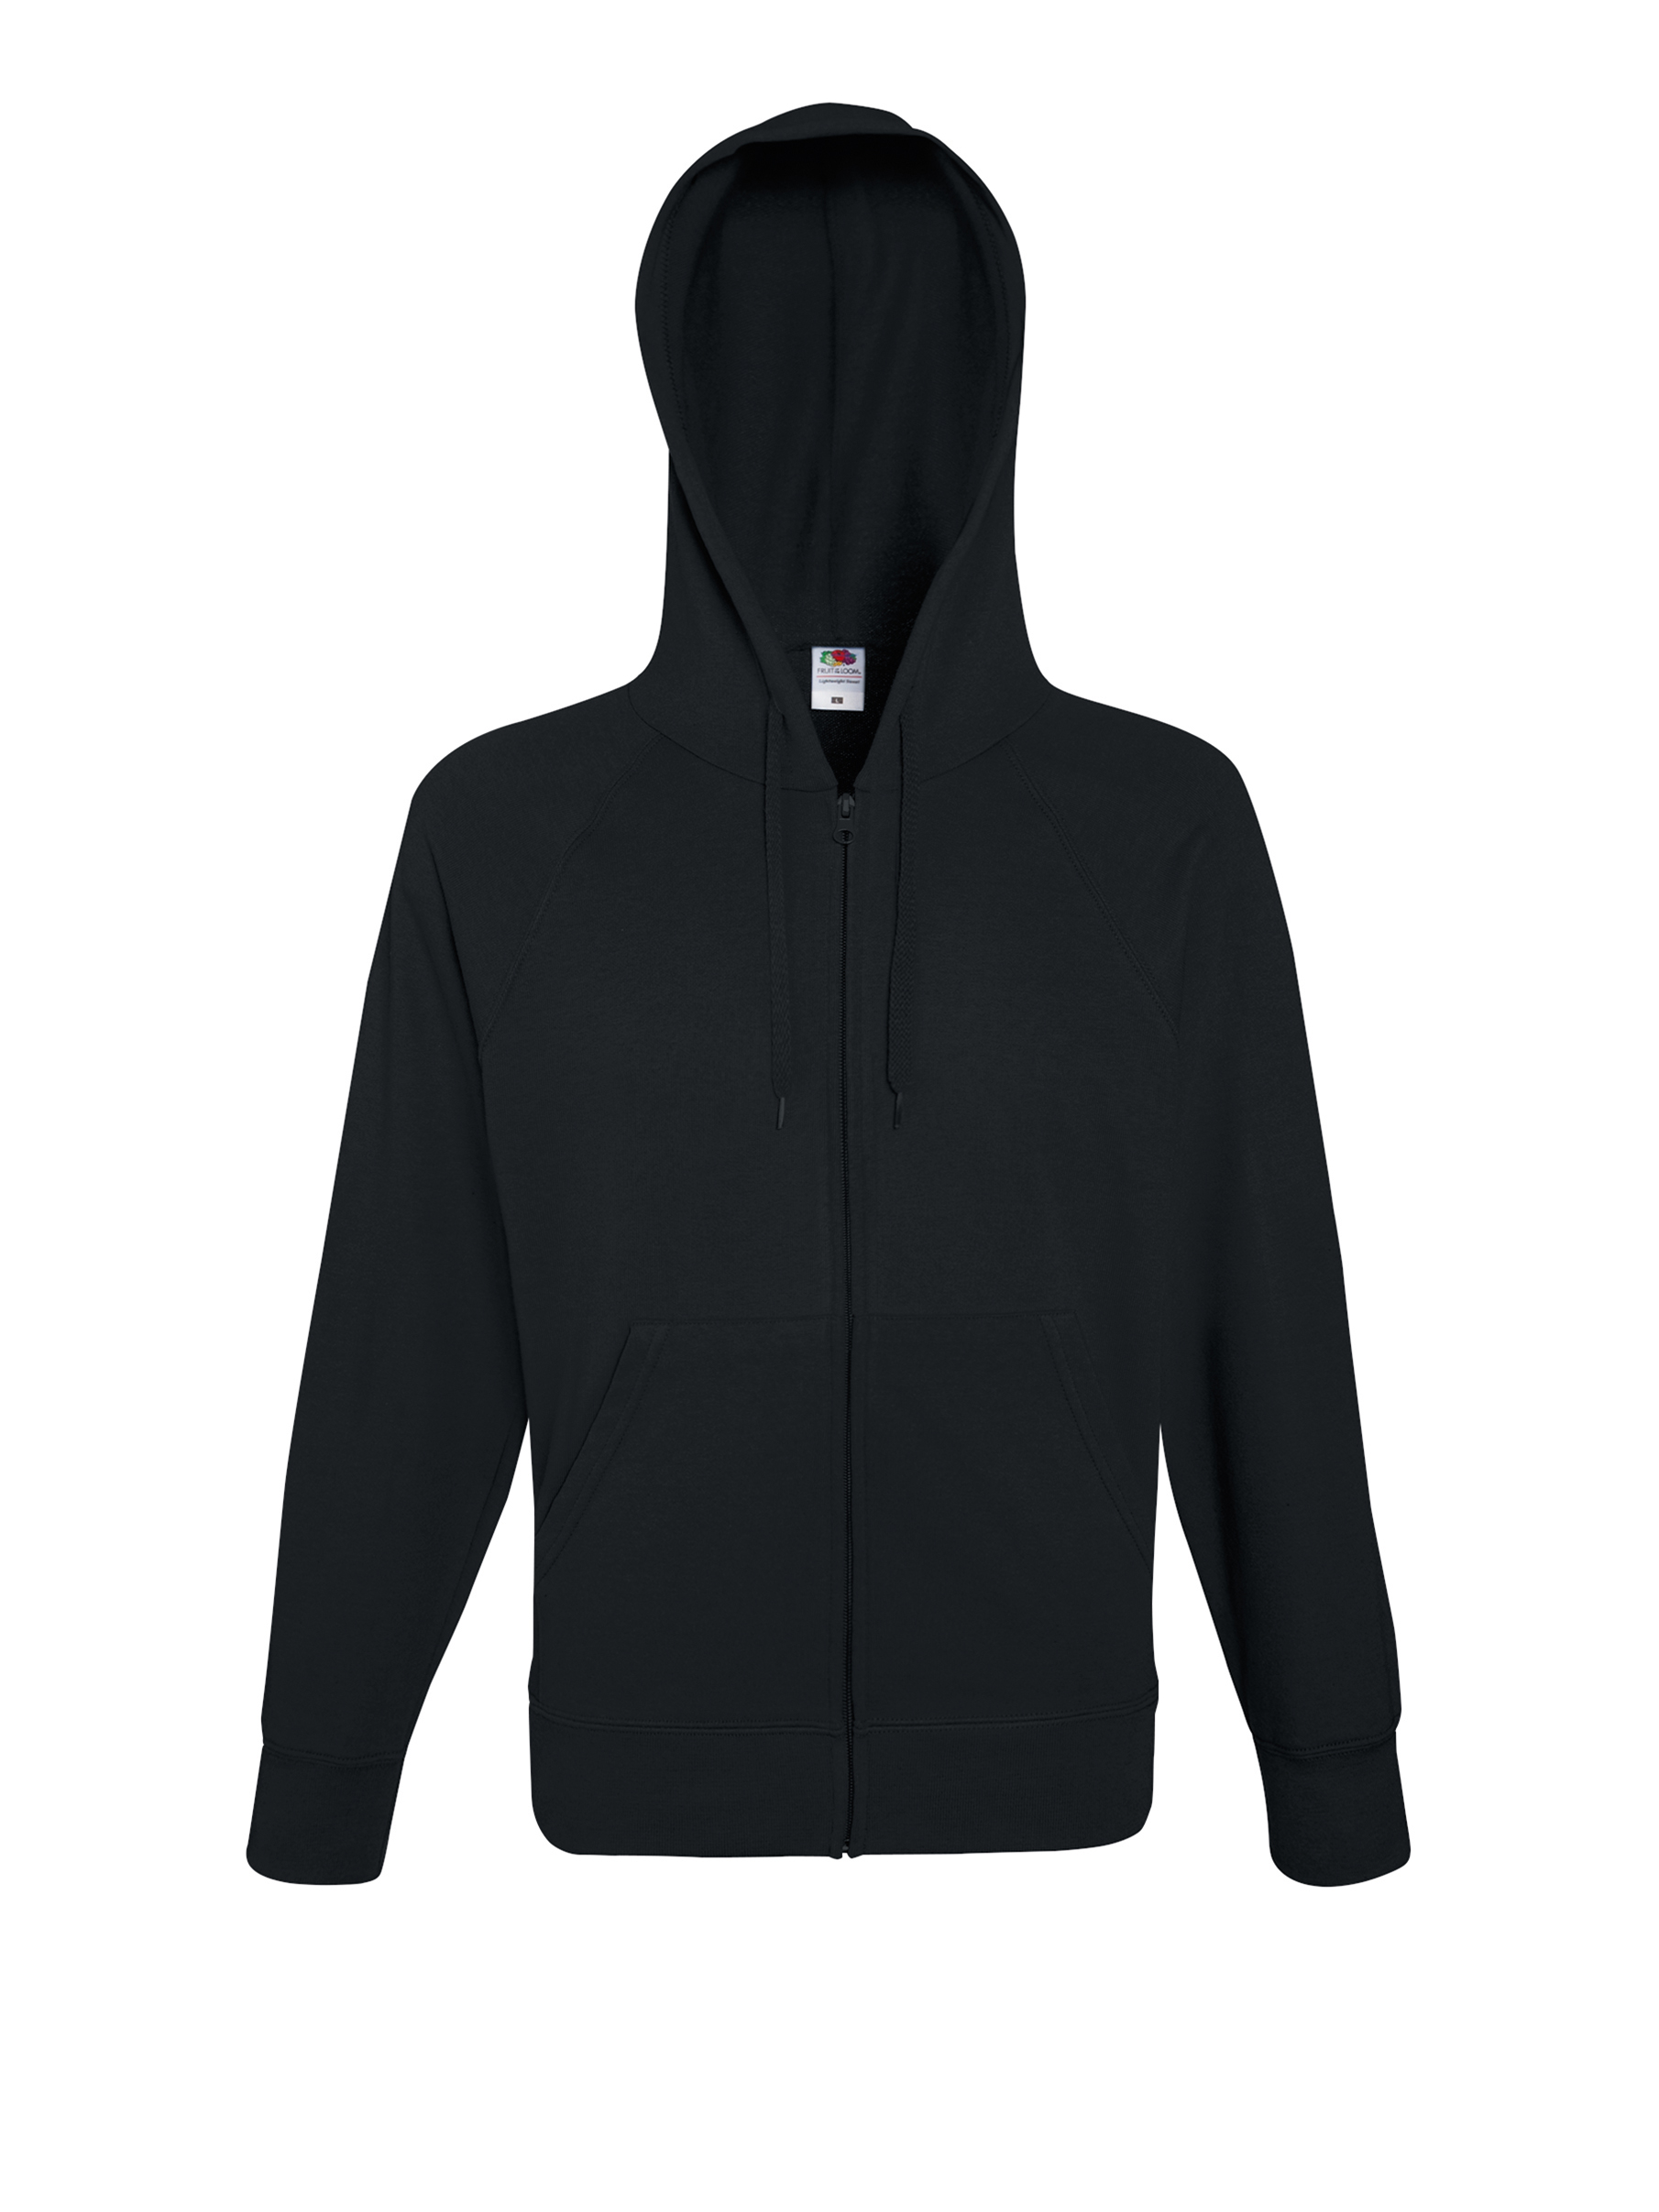 ax-httpswebsystems.s3.amazonaws.comtmp_for_downloadfruit-of-the-loom-lightweight-hooded-sweatshirt-jacket-black.jpeg